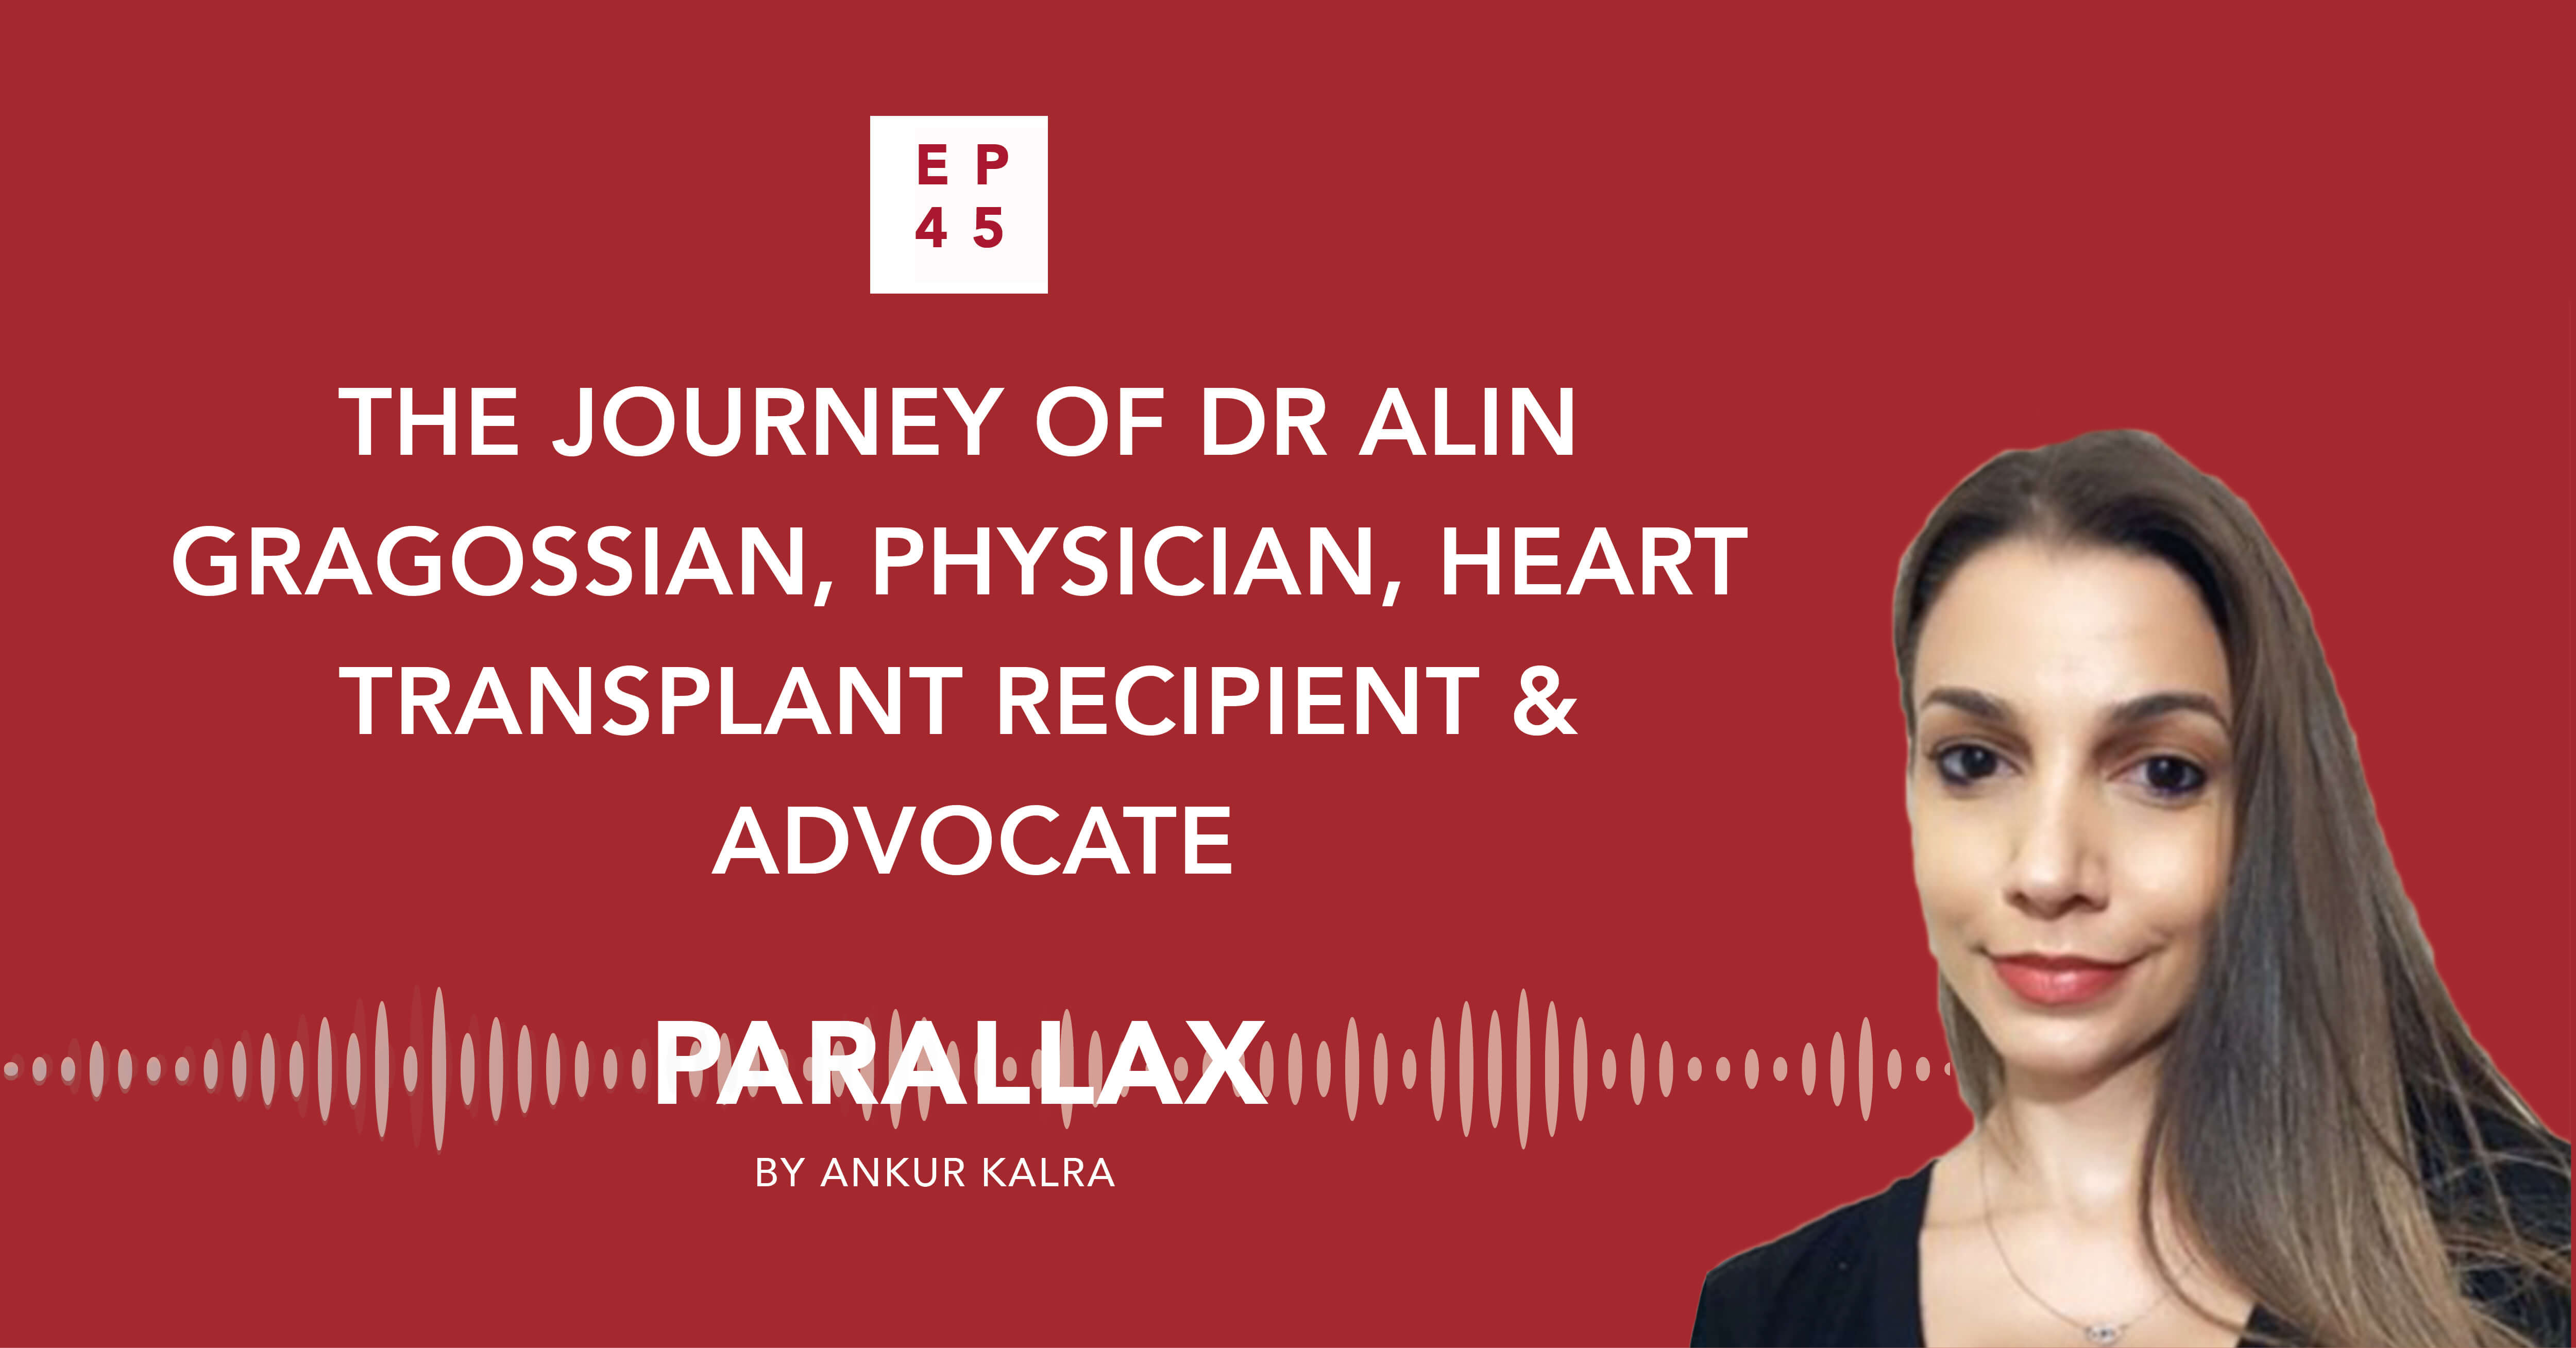 EP 45: The Journey of Dr Alin Gragossian, Physician, Heart Transplant Recipient & Advocate